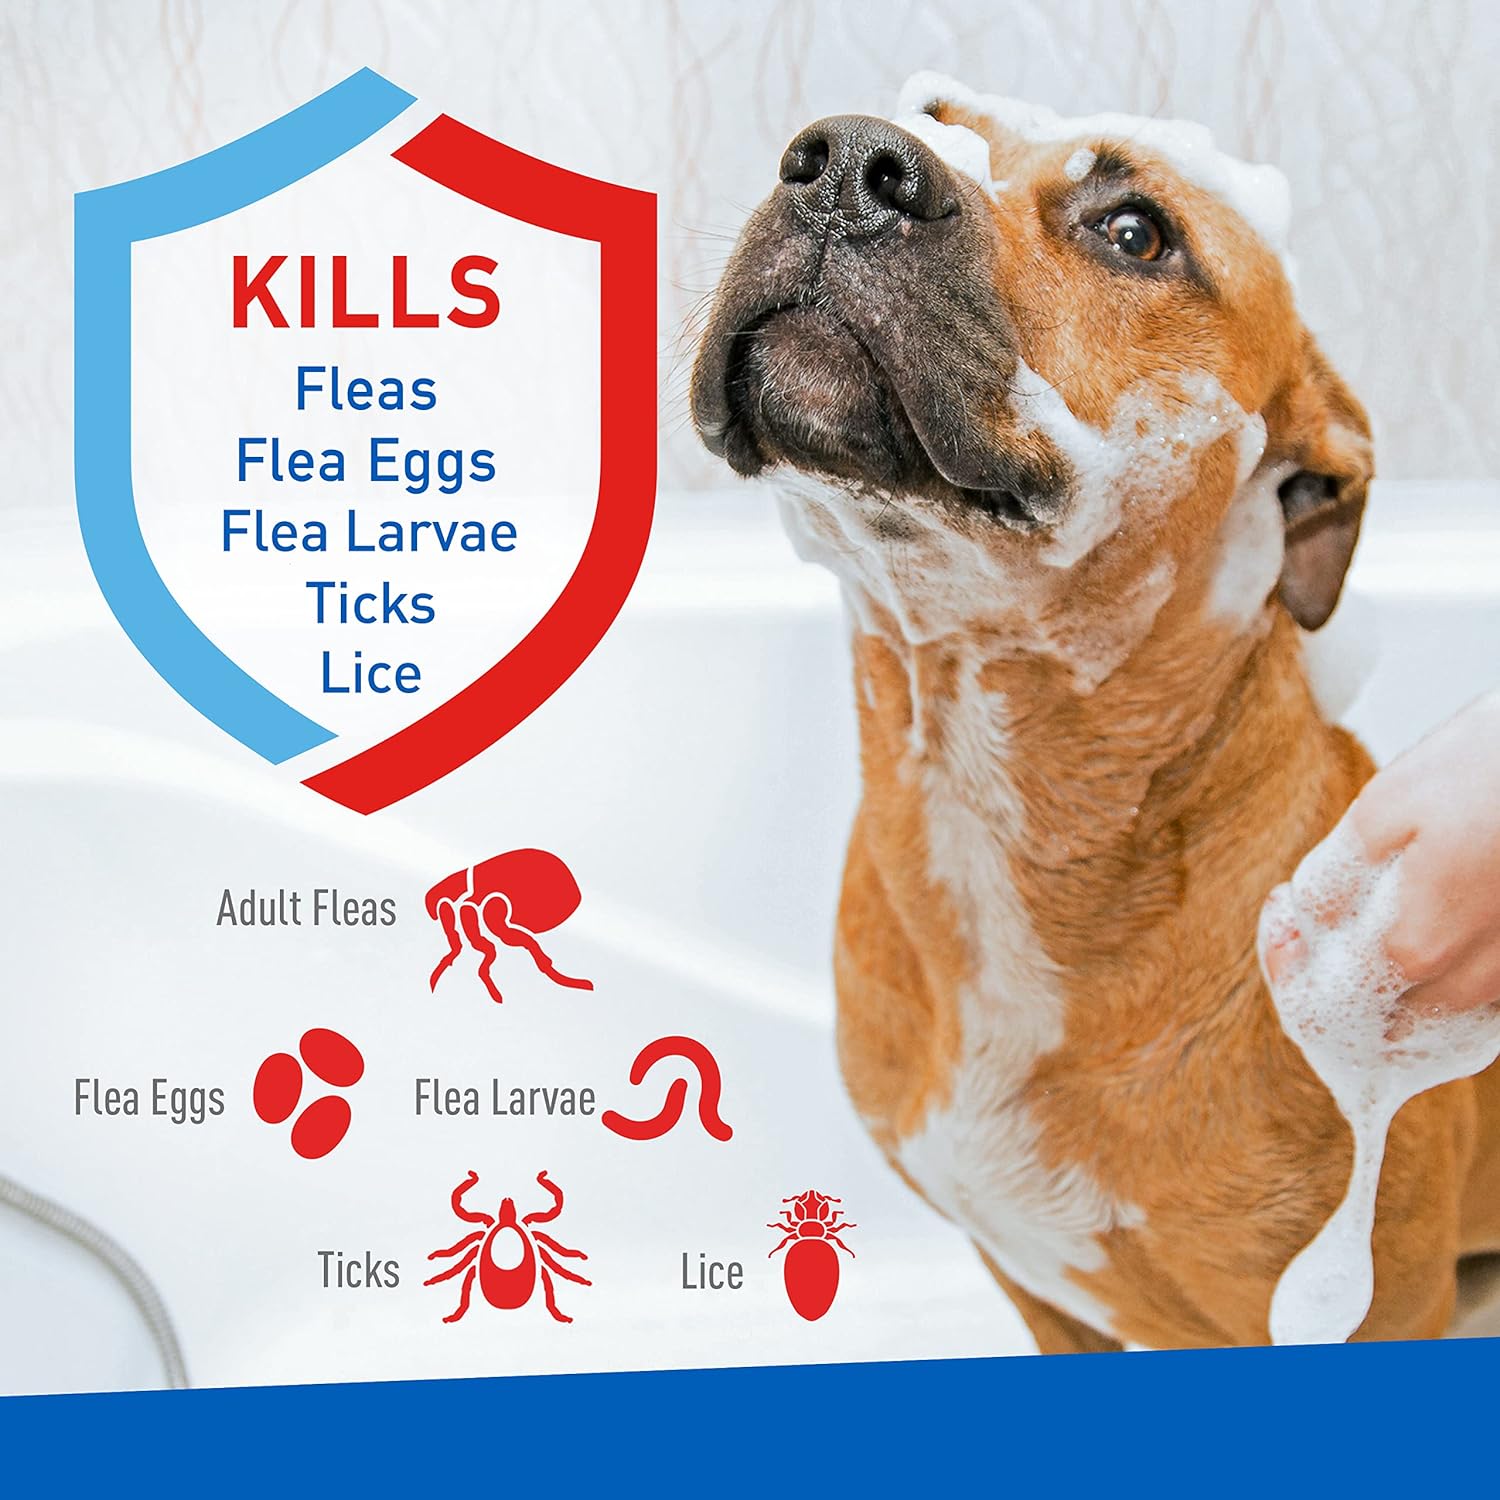 Adams Plus Flea & Tick Shampoo with Precor - Sensitive Skin Flea Treatment for Cats, Kittens, Dogs, and Puppies